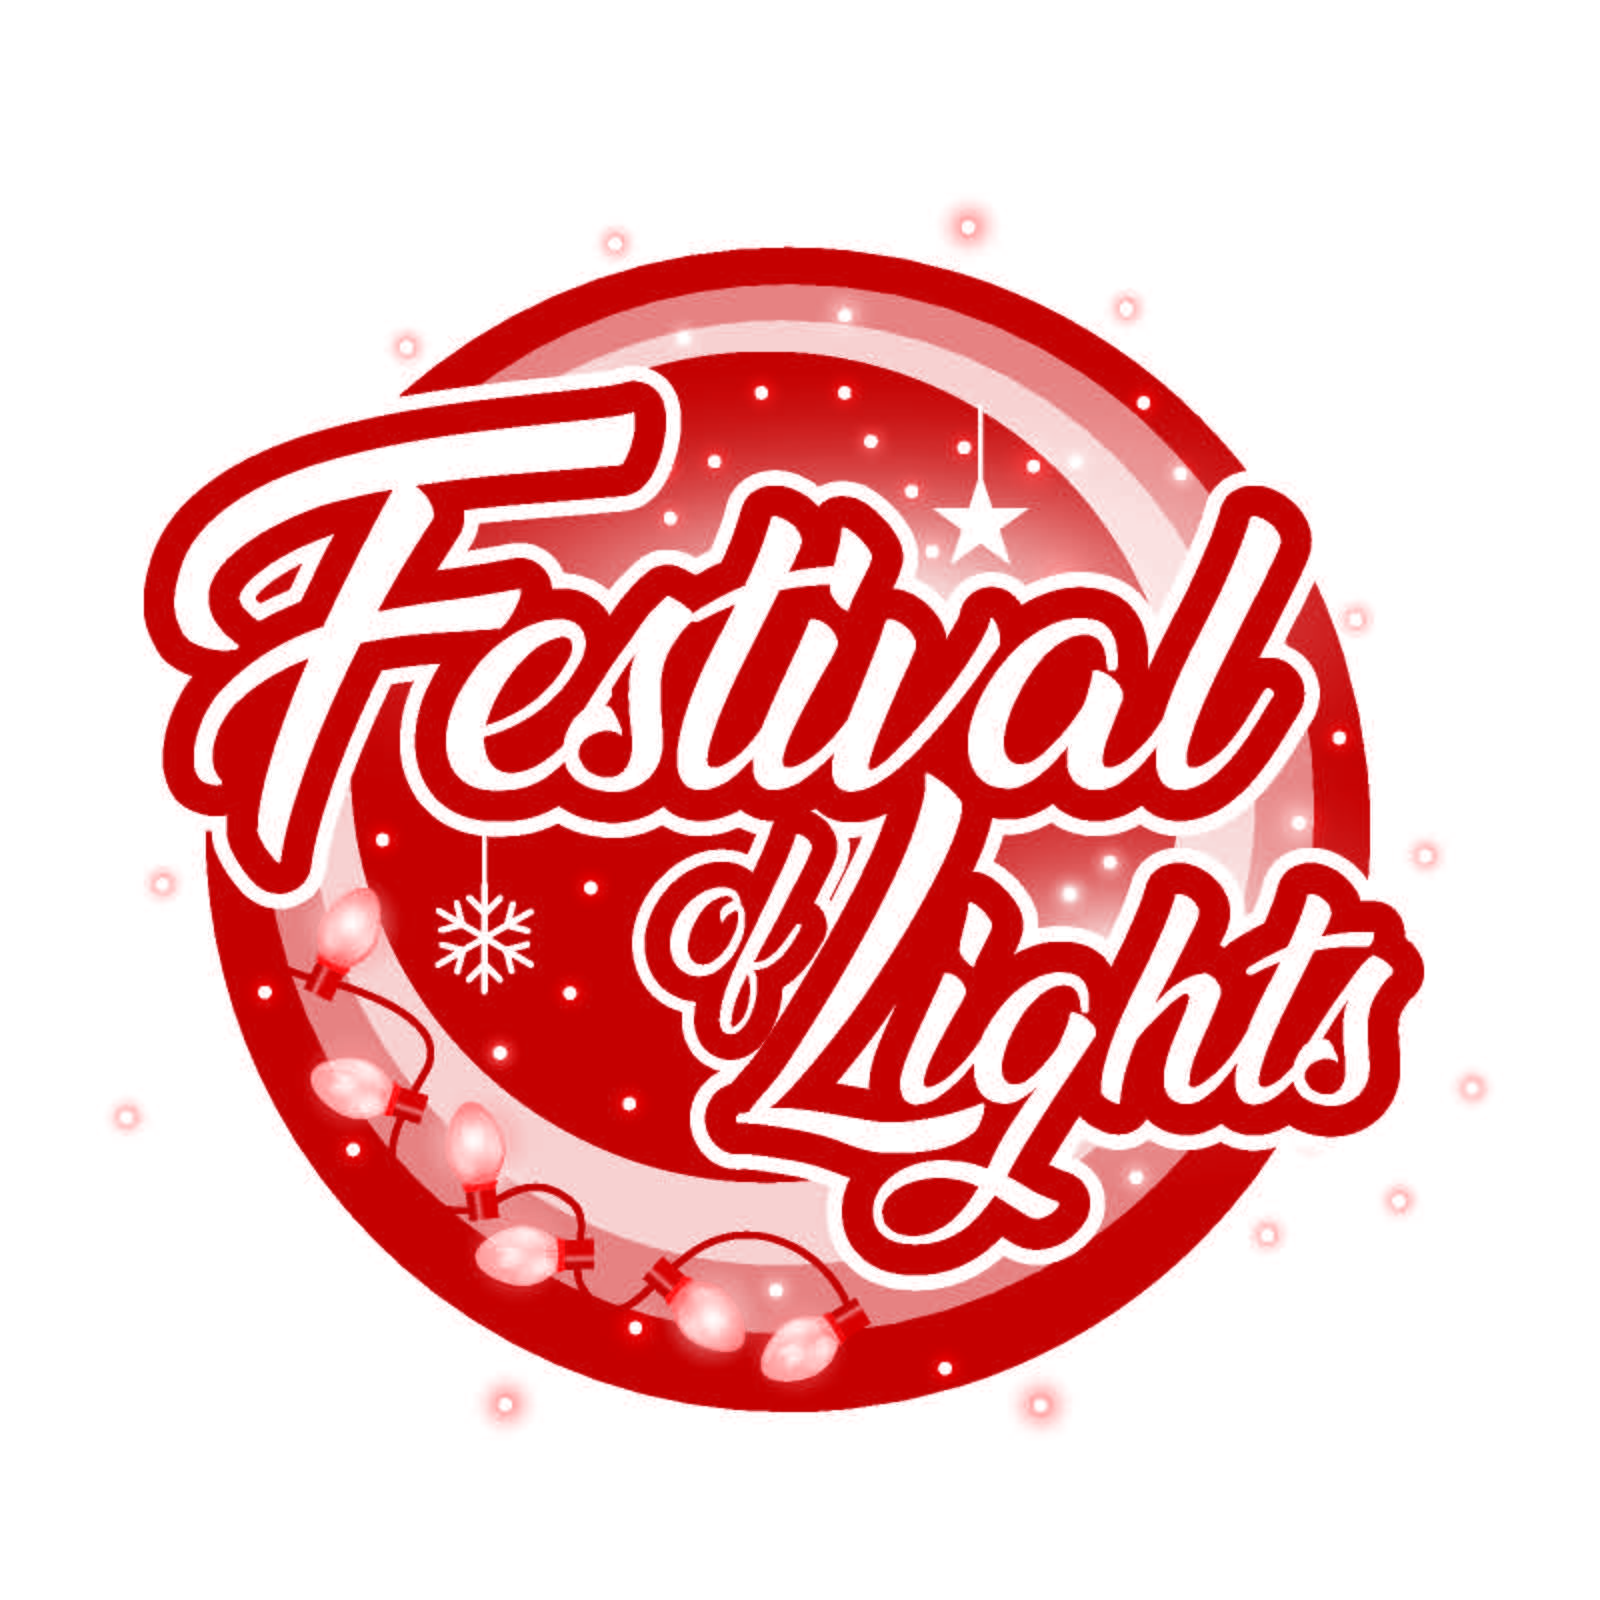 Perkinston Campus plans Festival of Lights for December 2